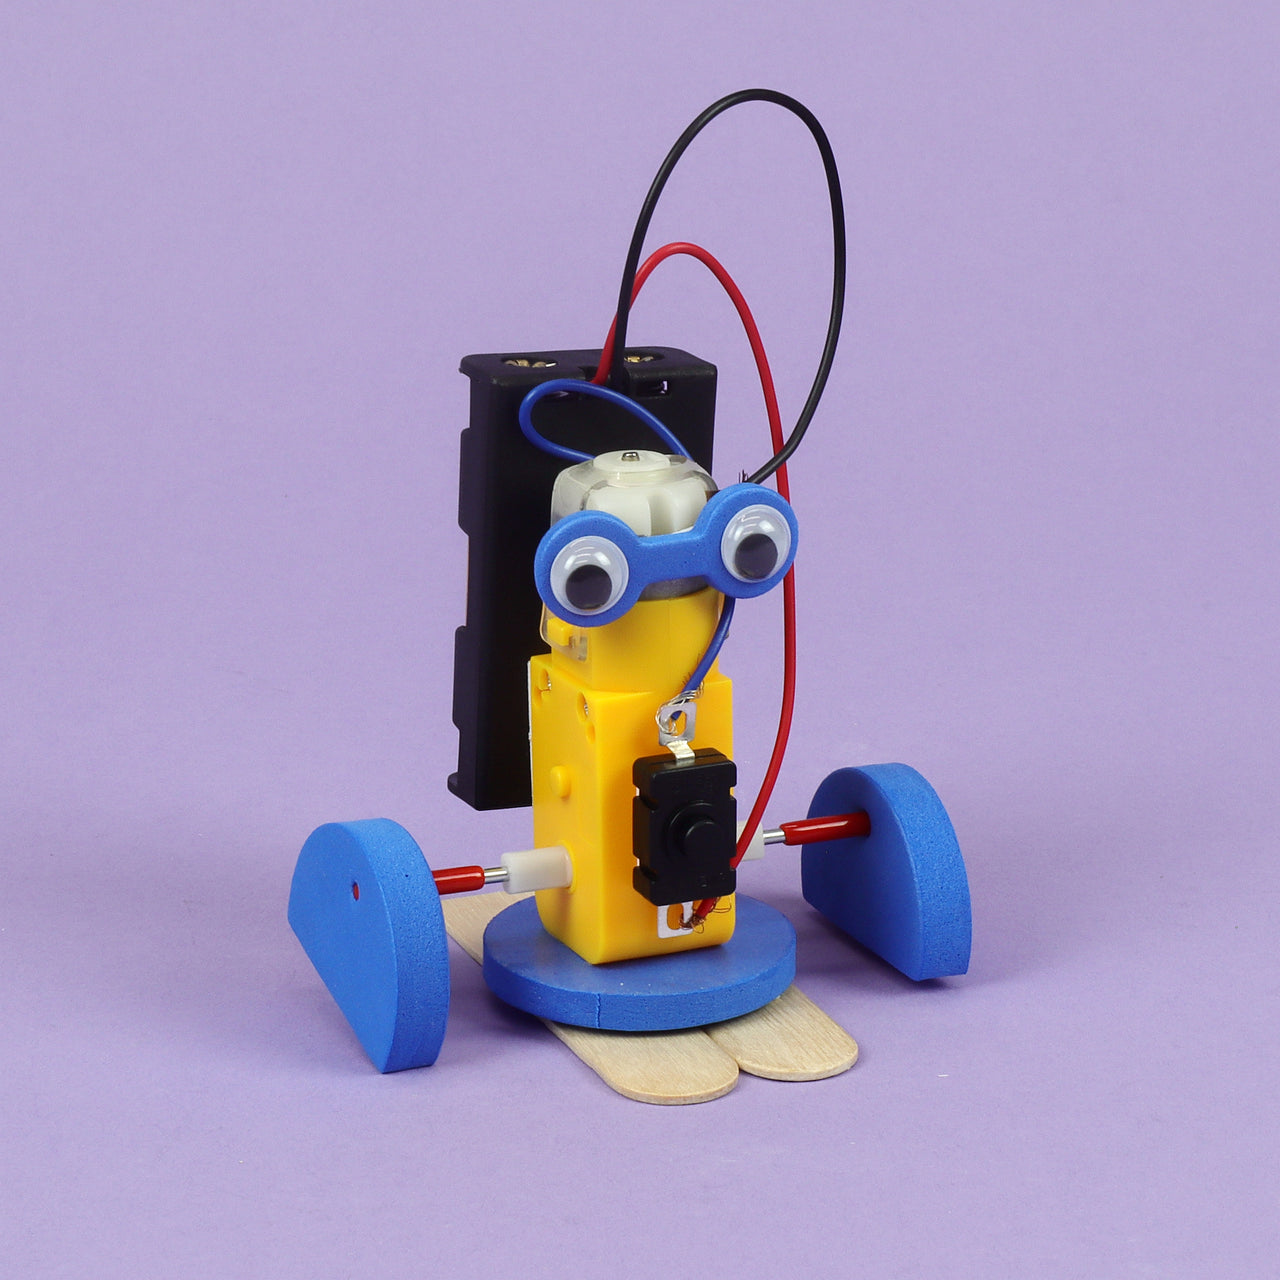 CreateKit Big Foot Robot DIY Kit